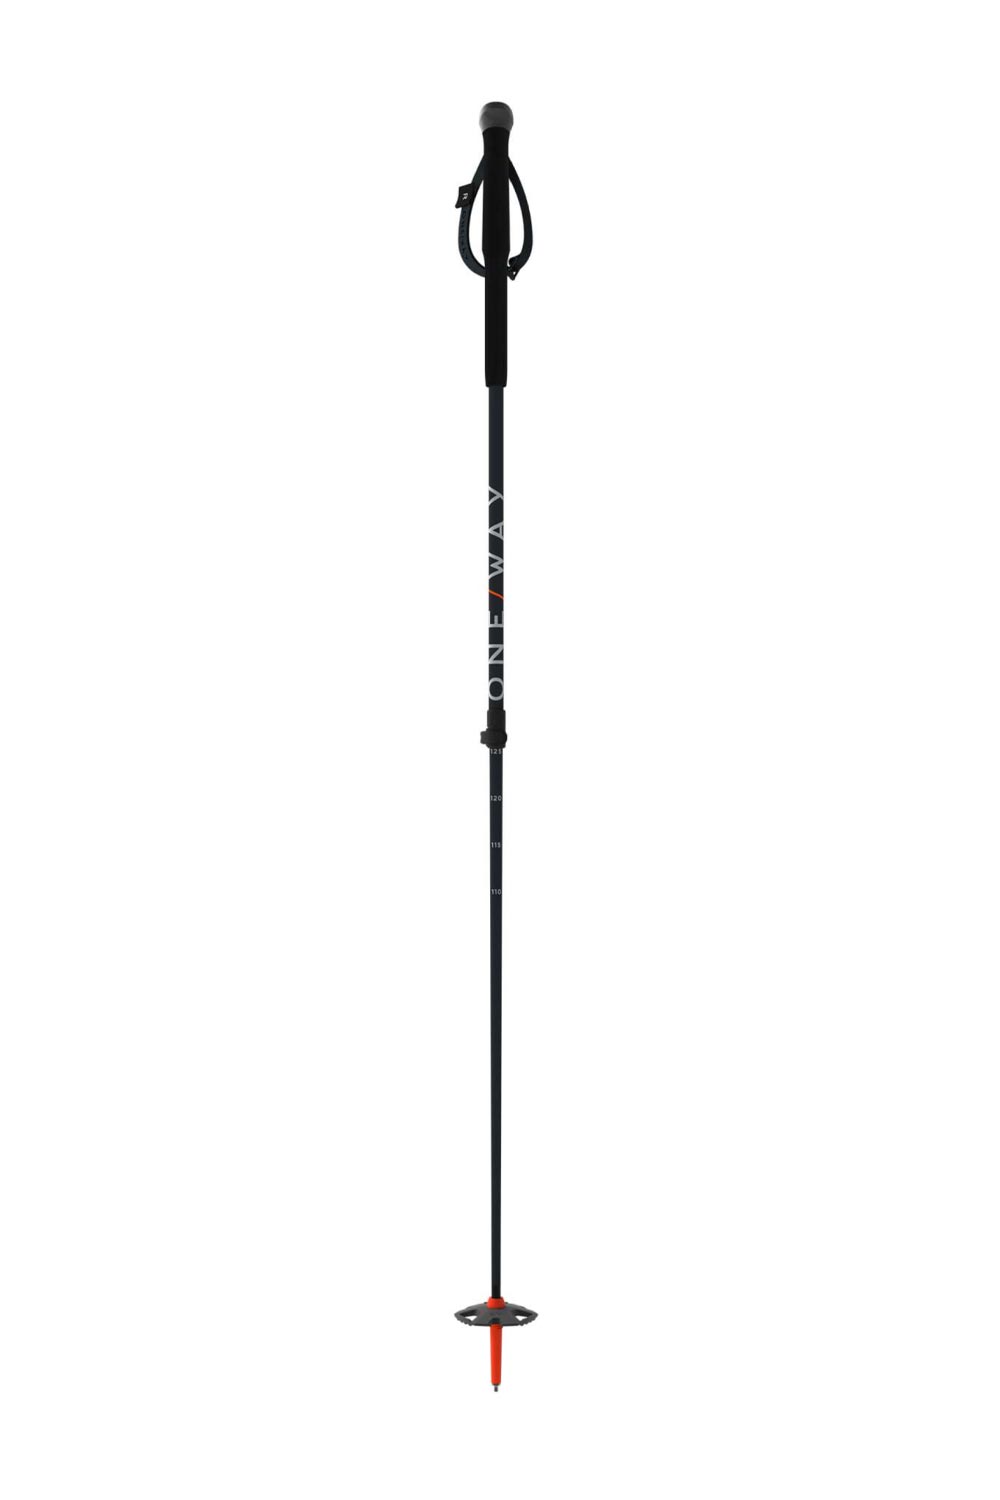 One Way Vario ski poles, adjustable length